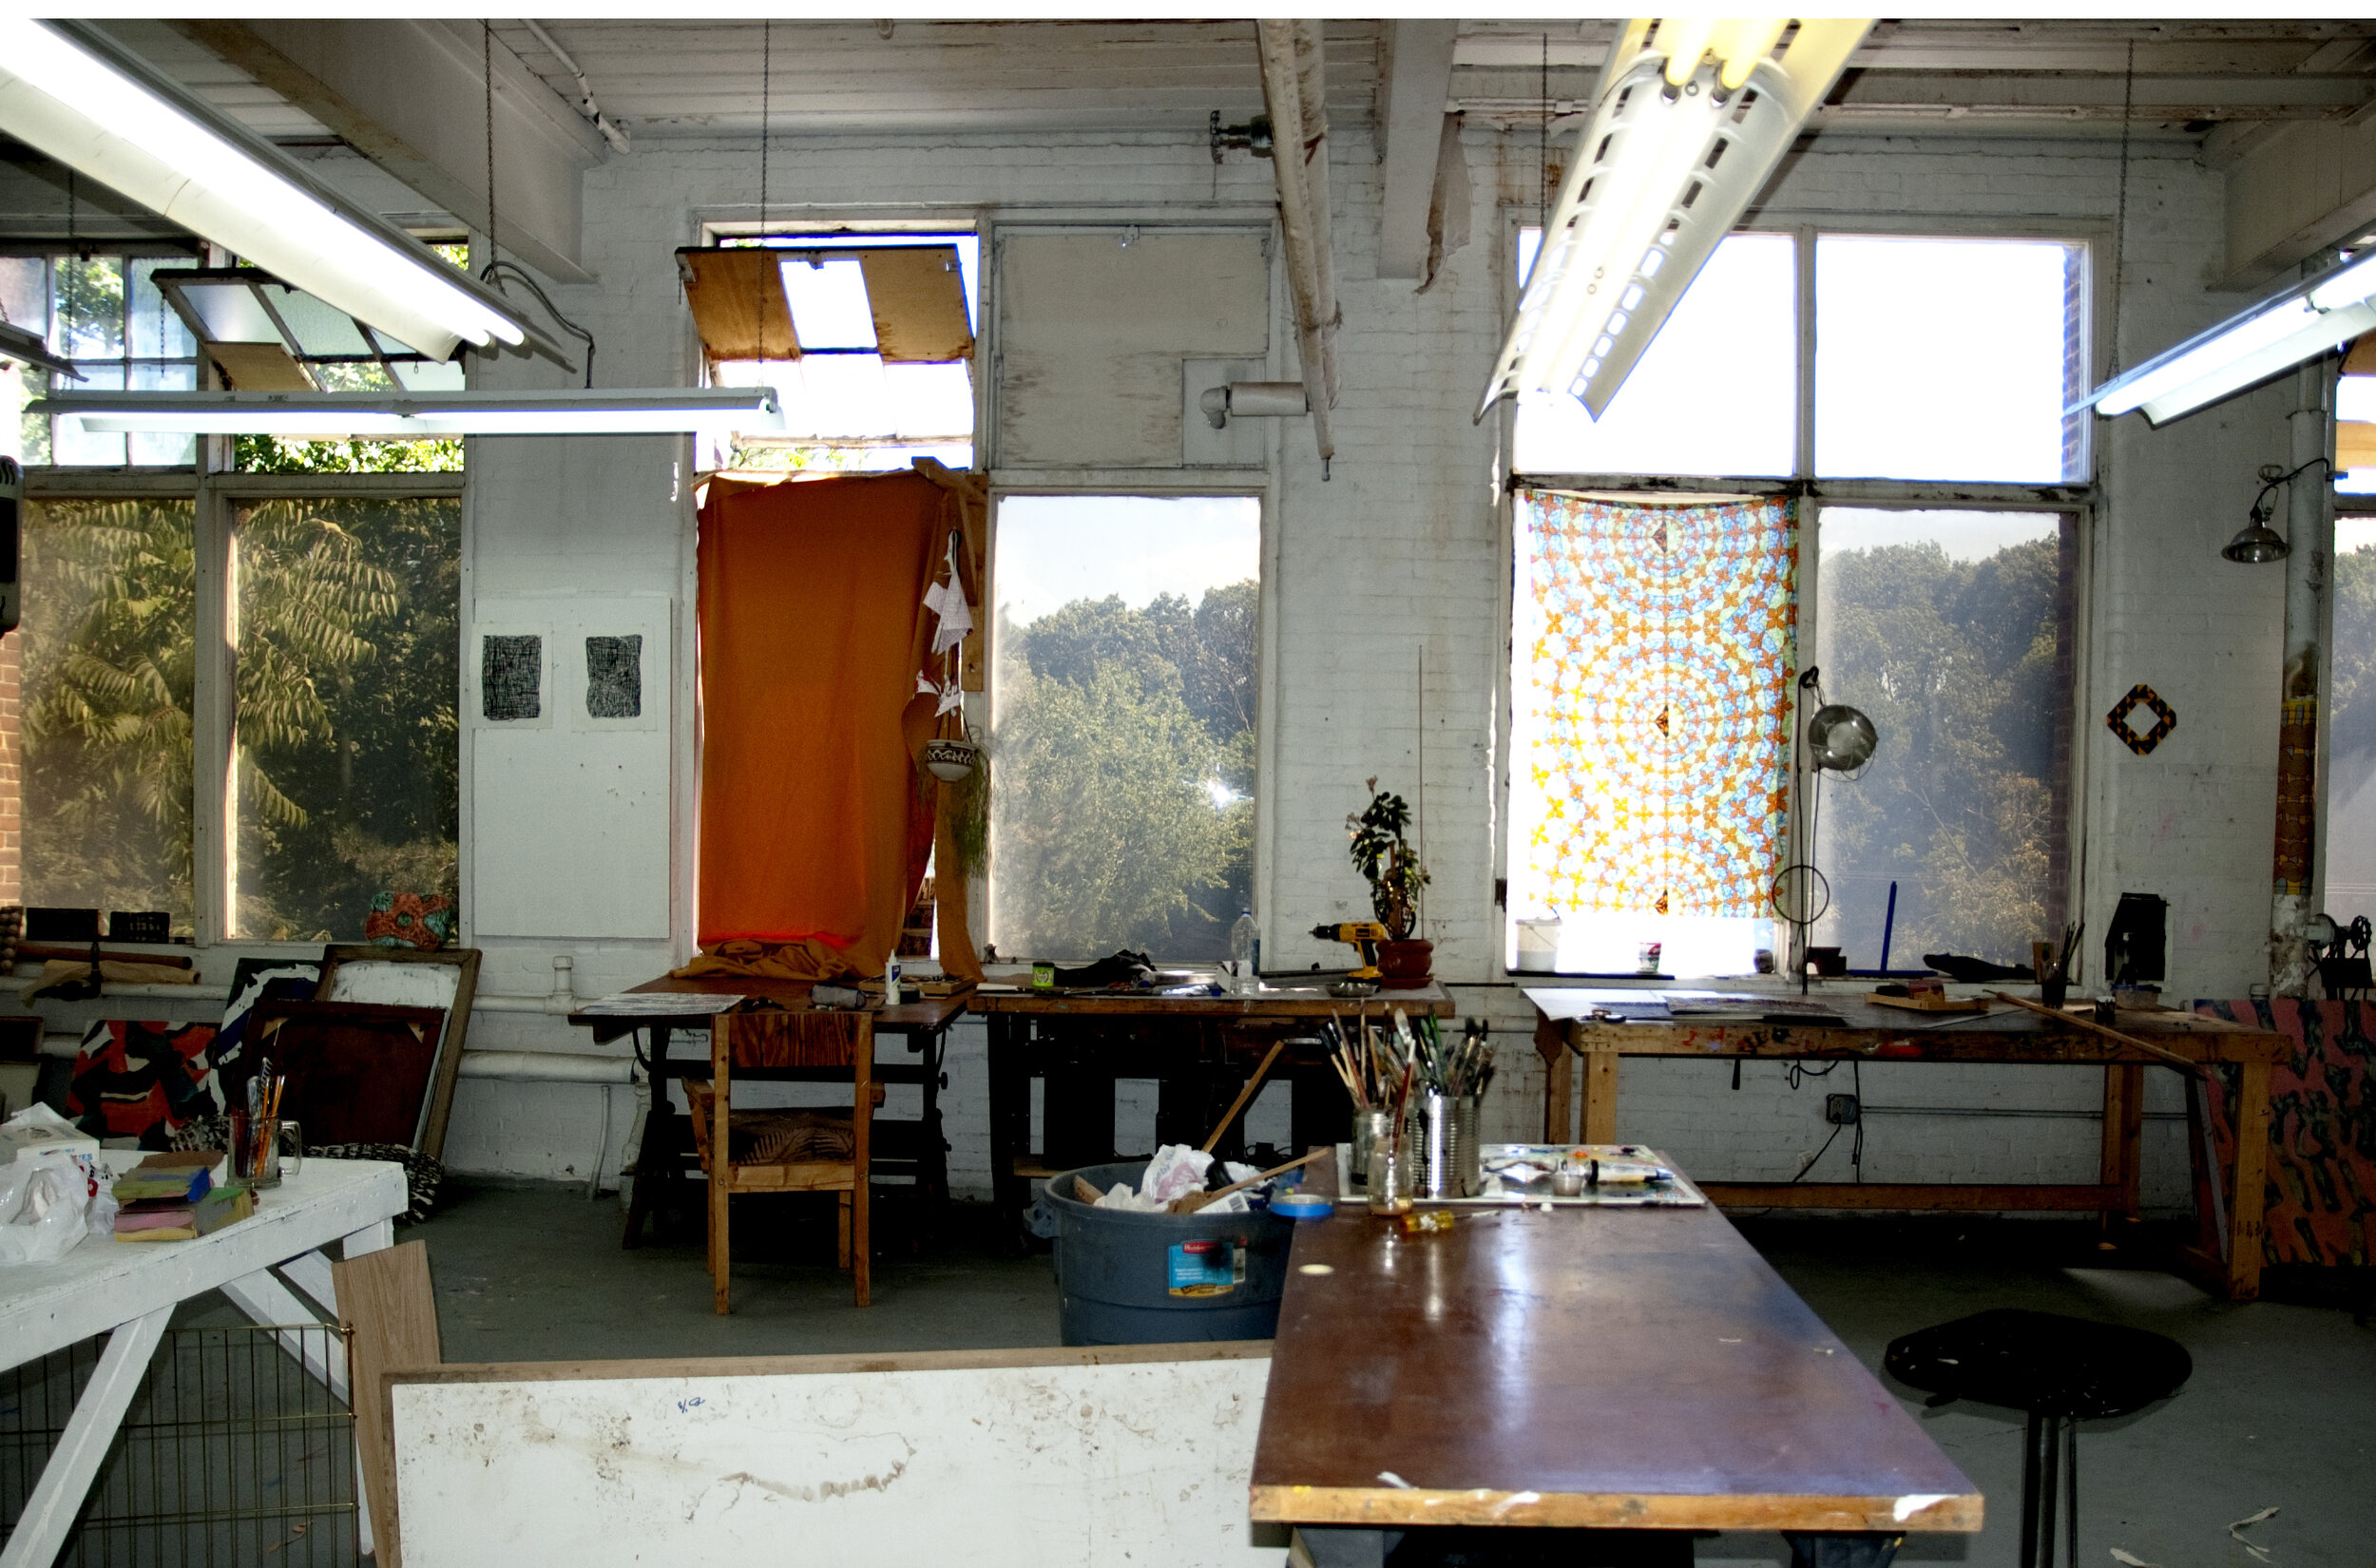  2010 Studio in Pawtucket, R.I. 